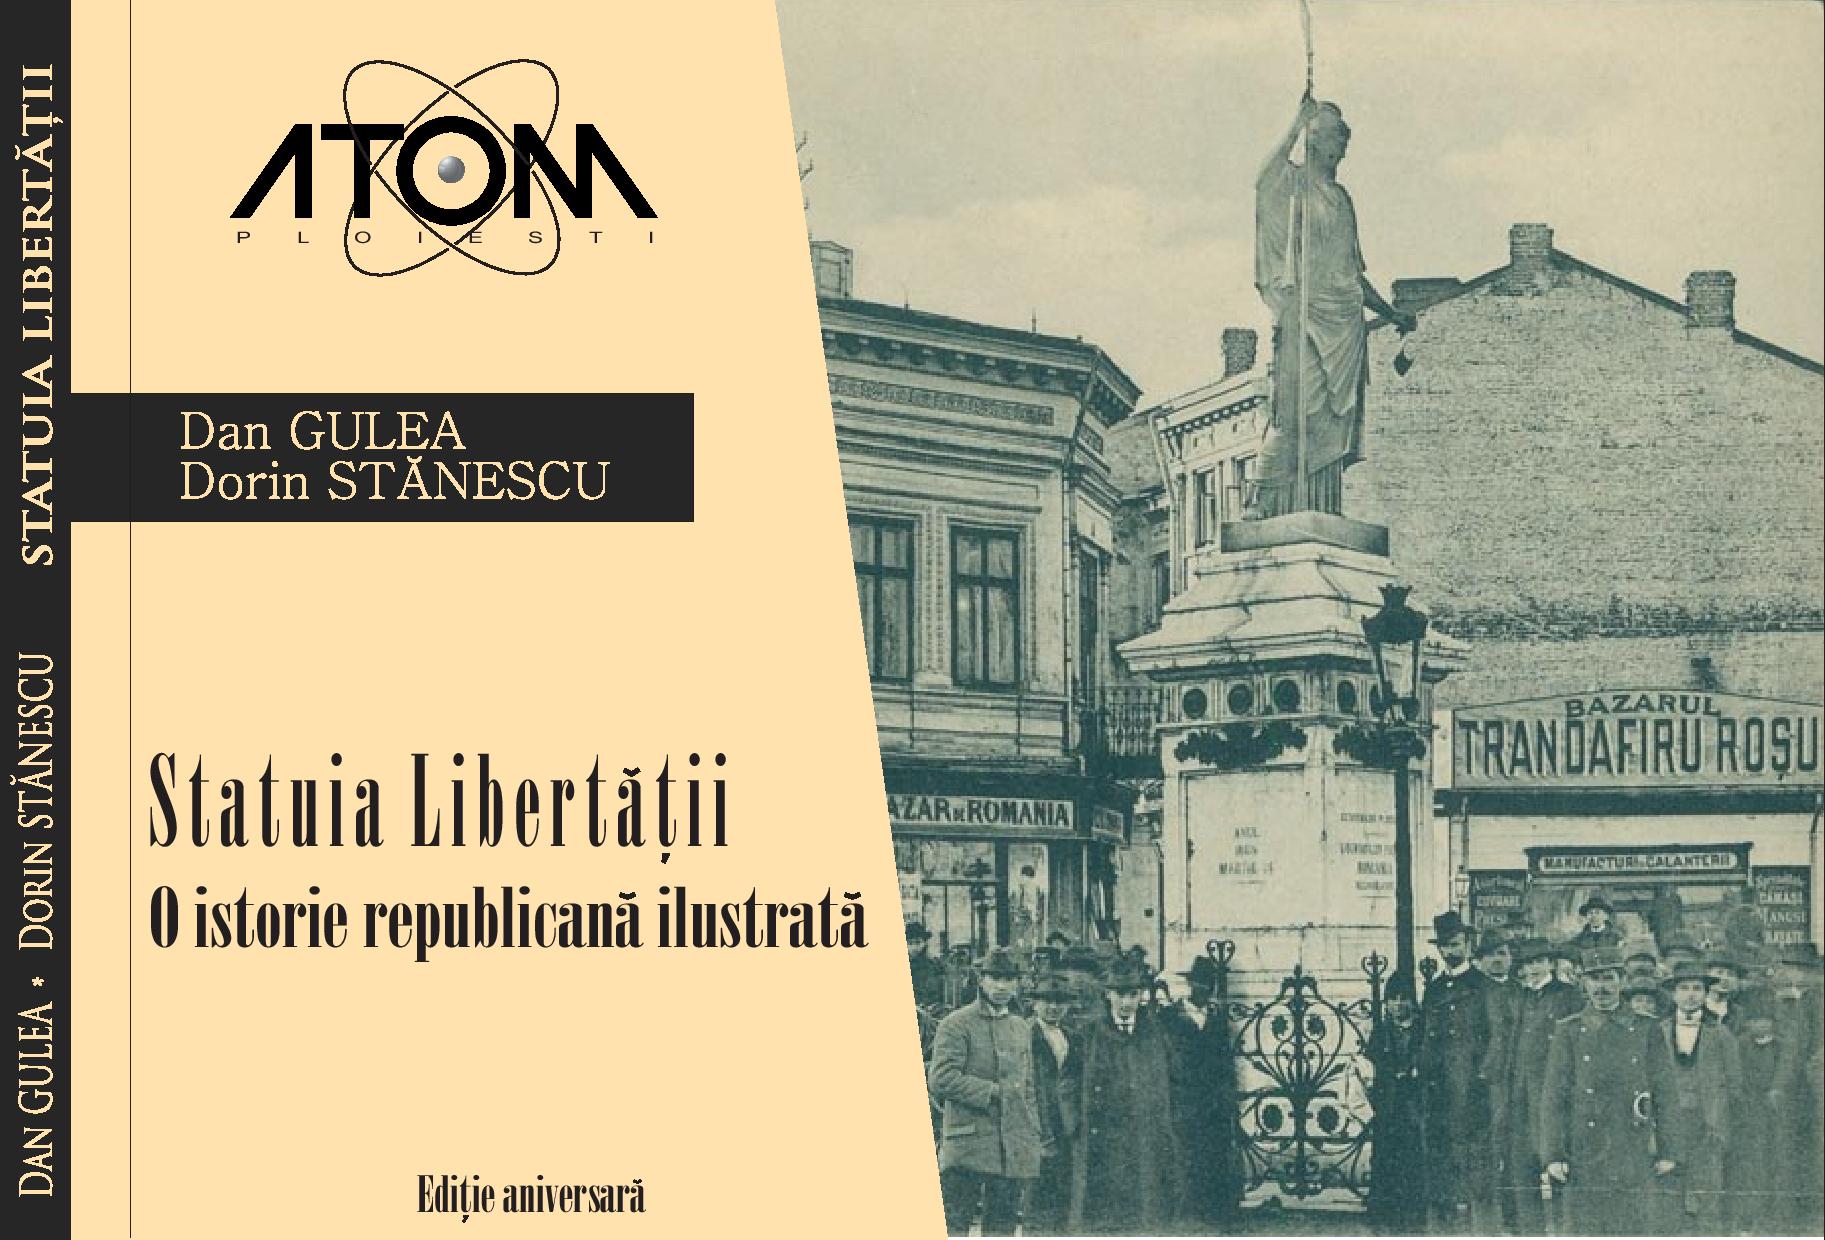 Statuia Libertatii – O istorie Republicana Ilustrata | Dan Gulea, Dorin Stanescu ATOM poza bestsellers.ro